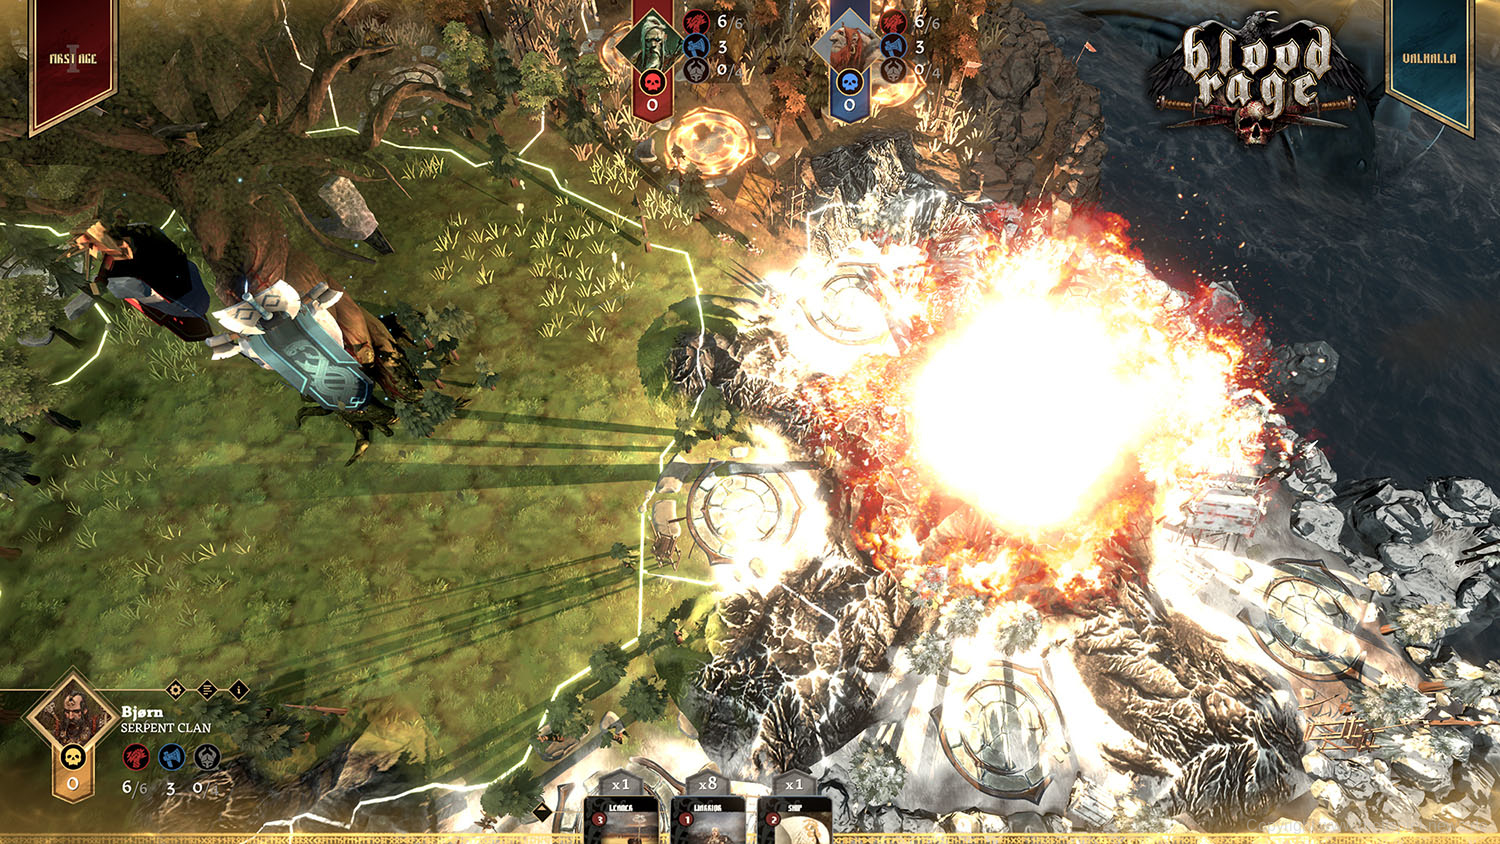 Blood Rage Digital Edition screenshot 4